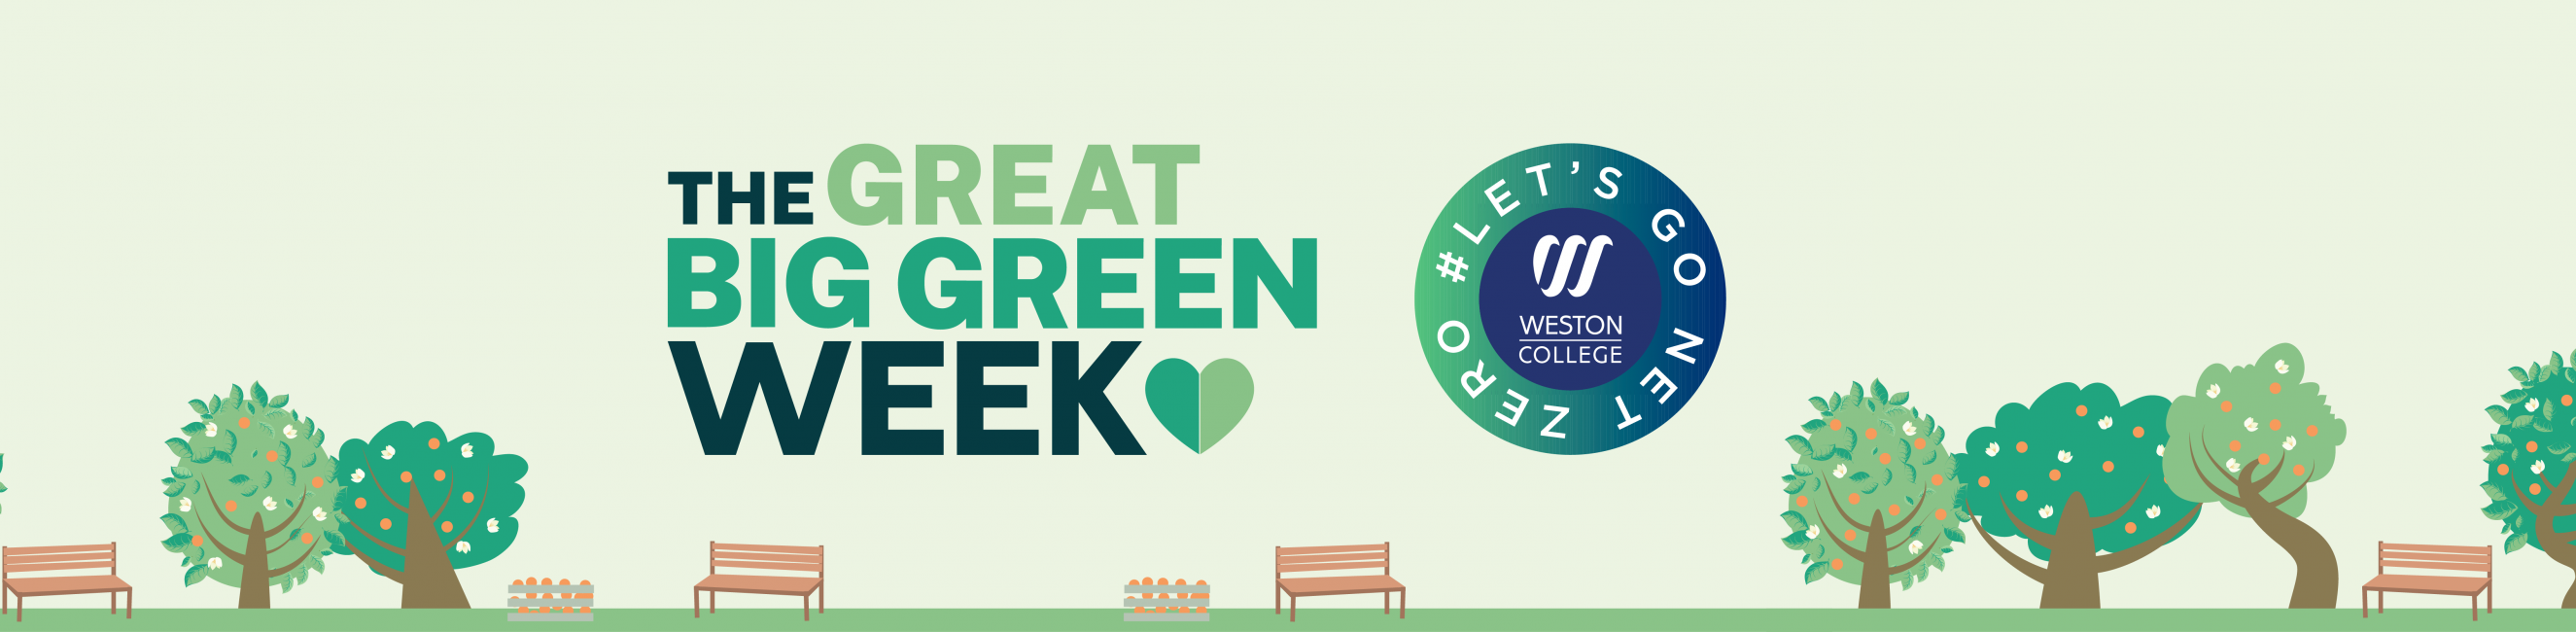 Great Big Green Week logo over a park